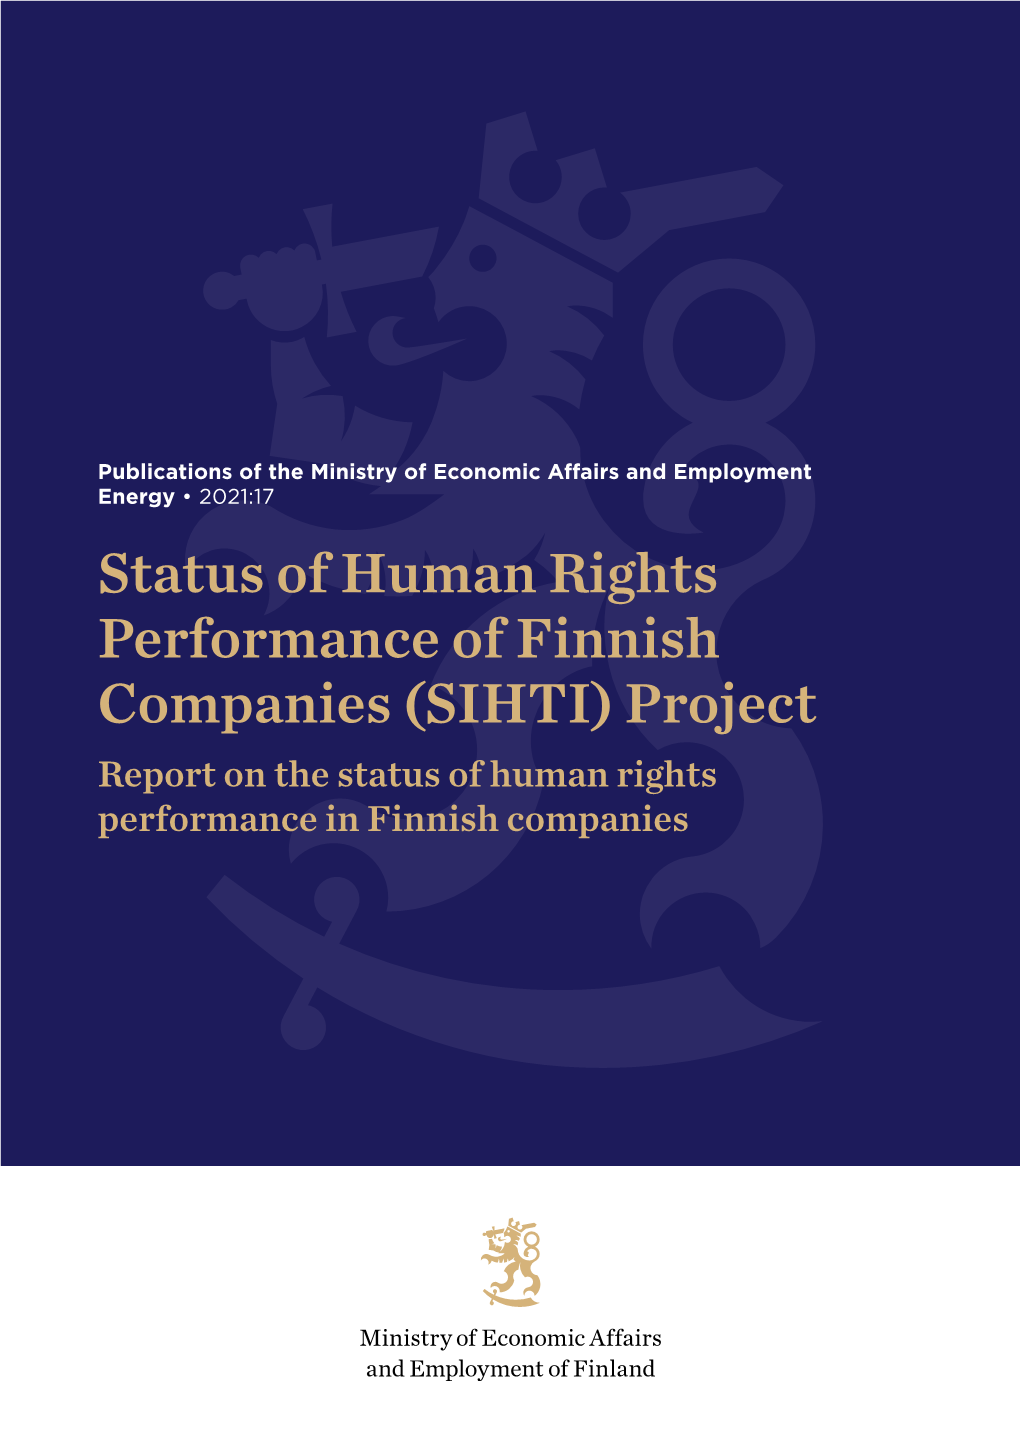 Status of Human Rights Performance of Finnish Companies